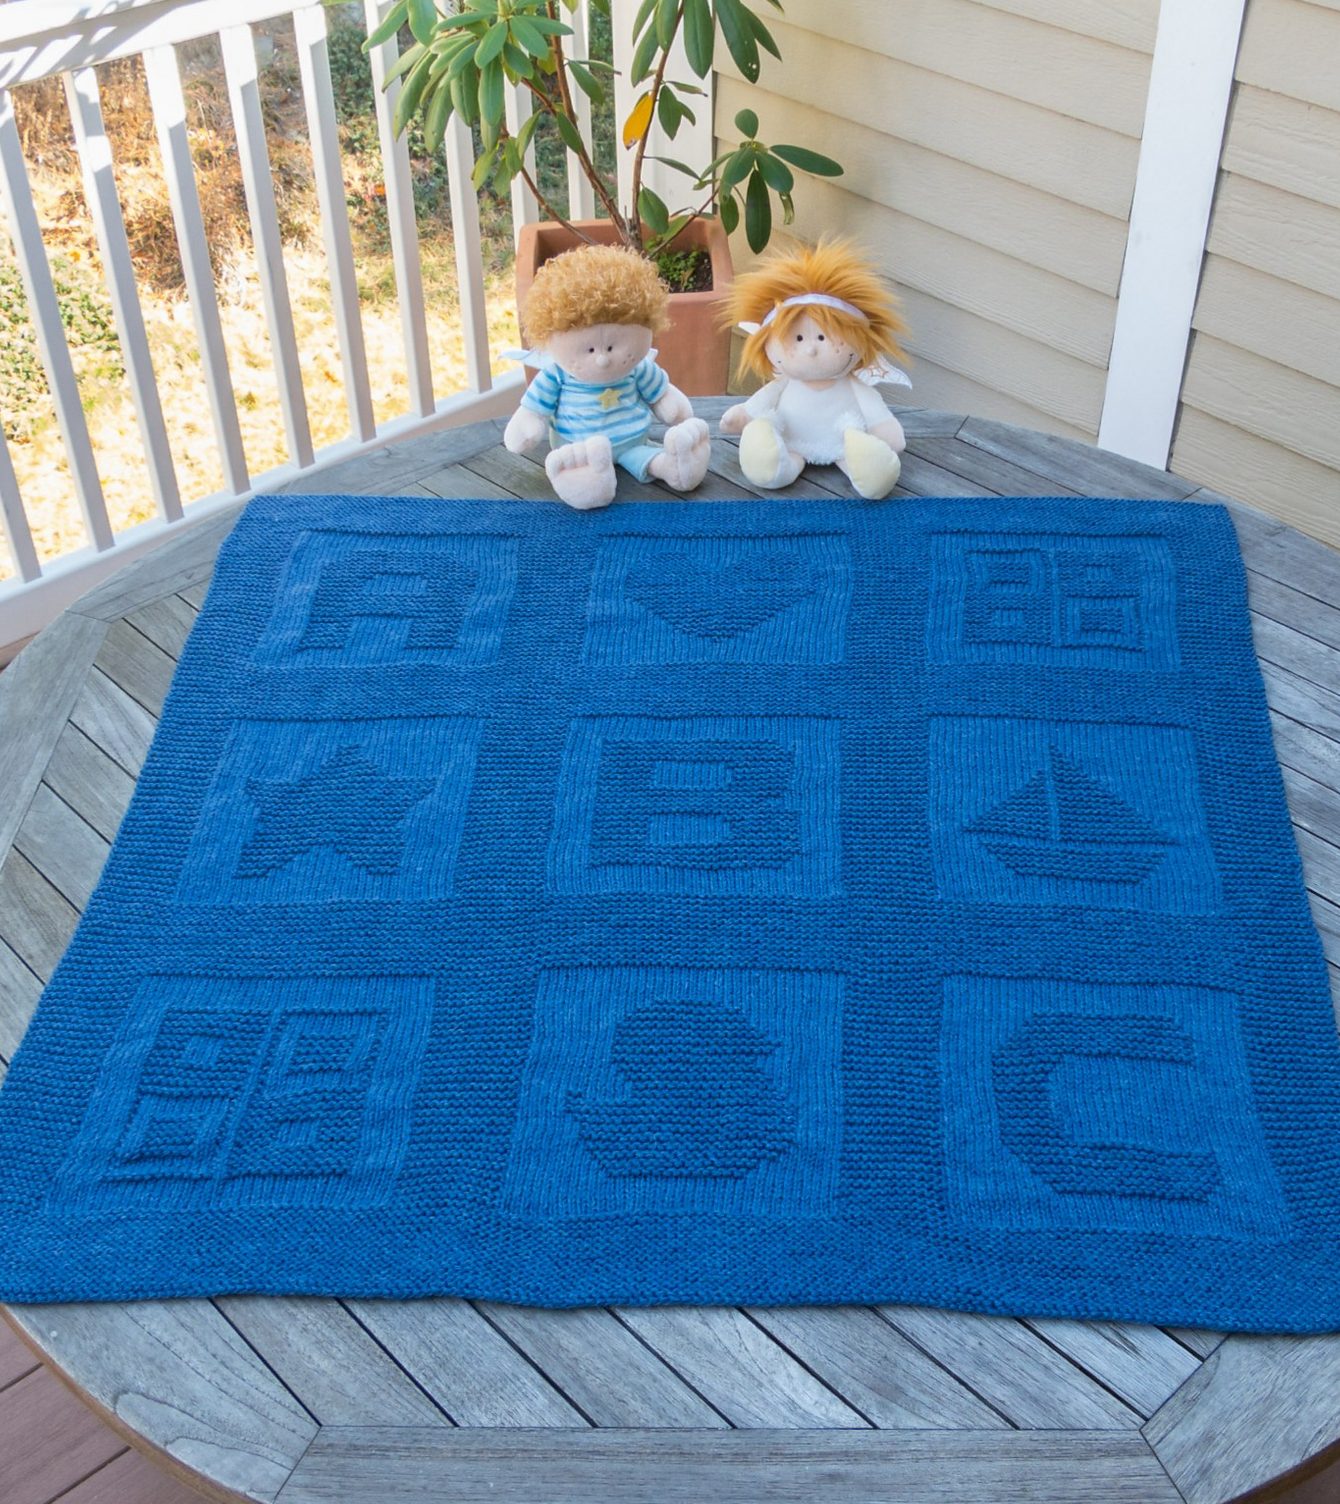 The Beautiful Free Baby Blanket Knitting Patterns